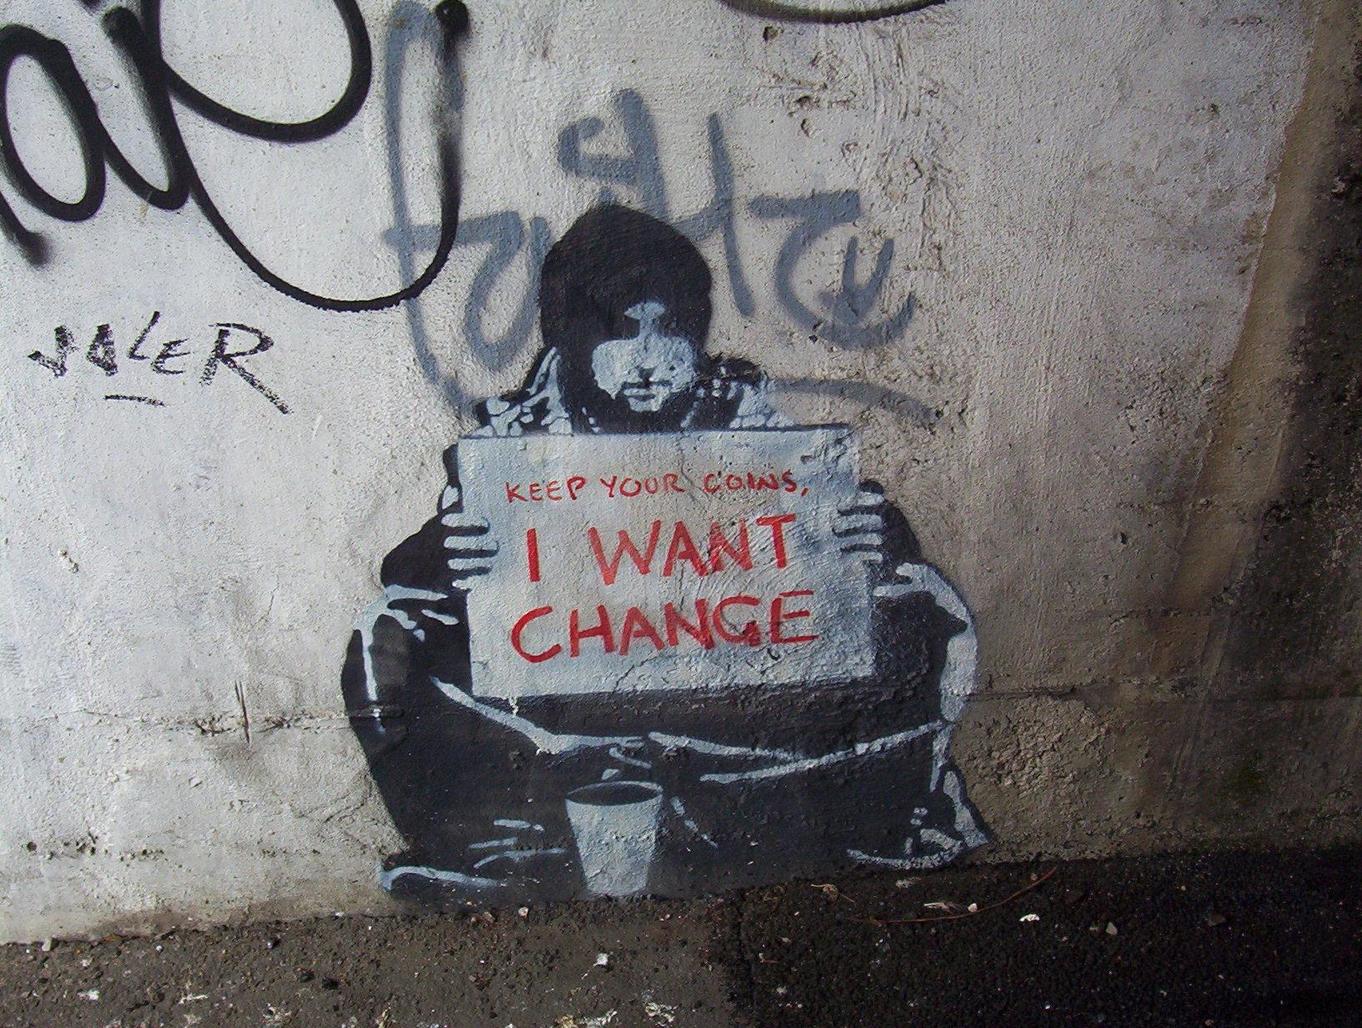 Meek Begging for change (2004). Sydney, Australia